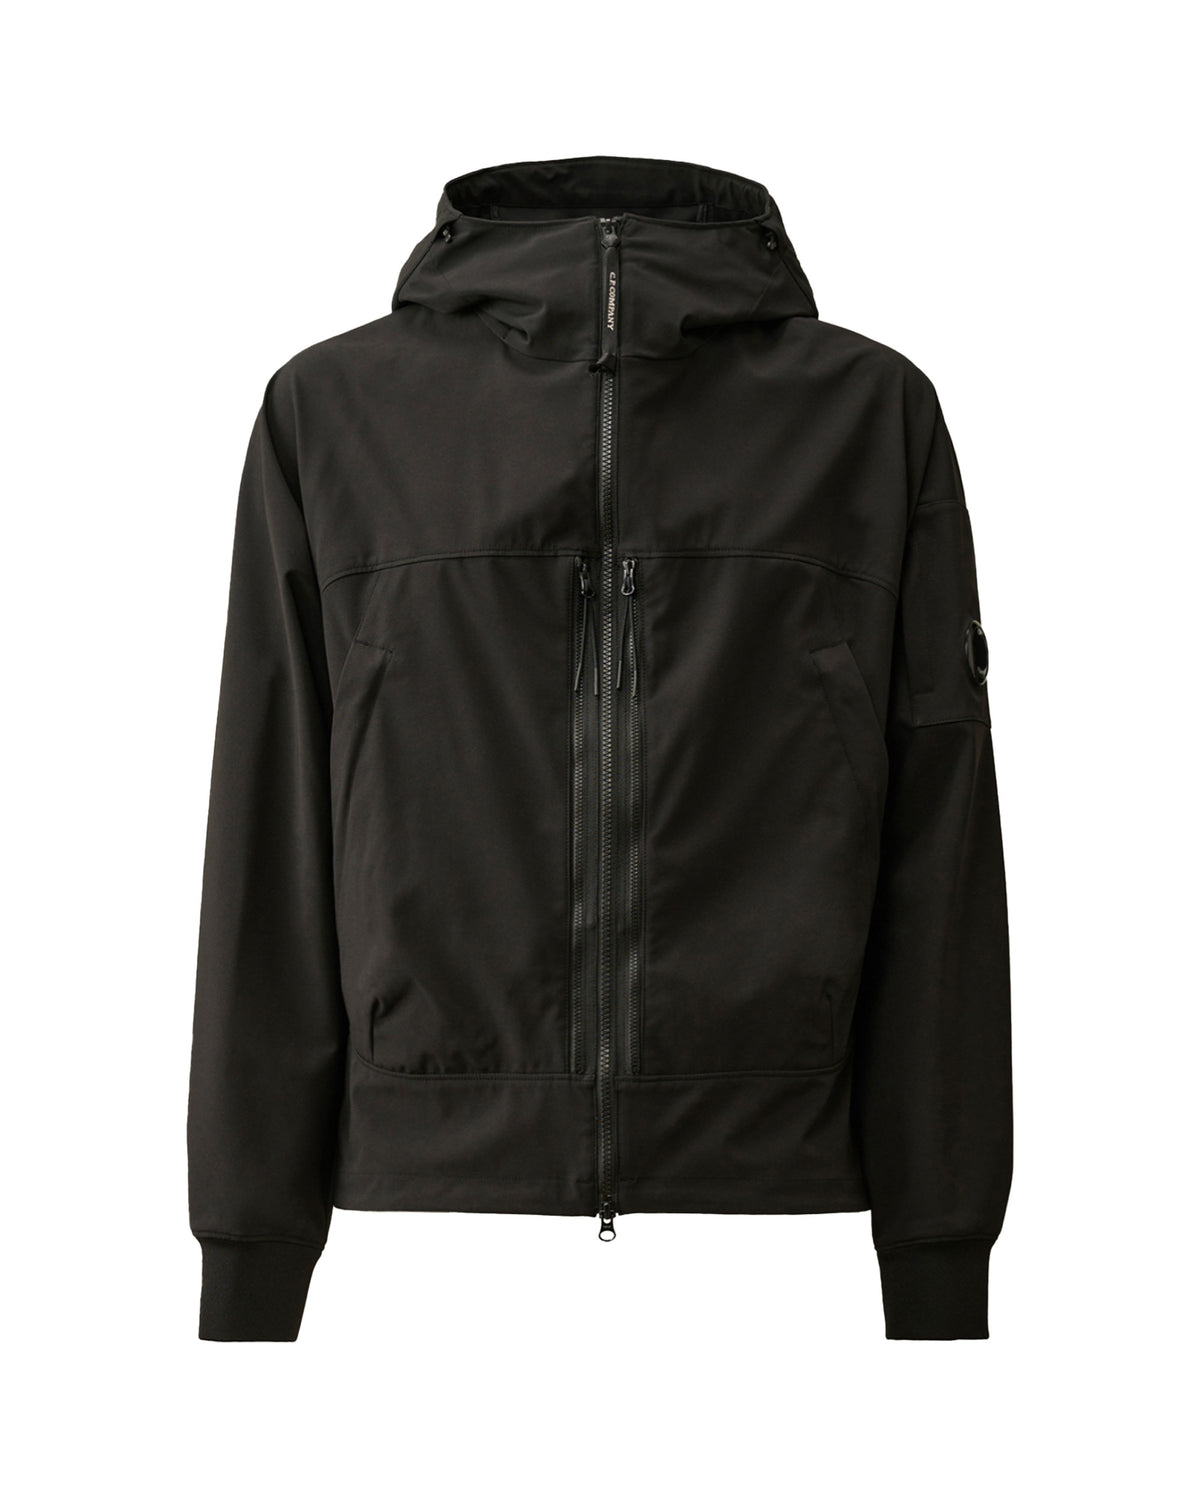 CP Company C.P. Shell-R Hooded Jacket Black